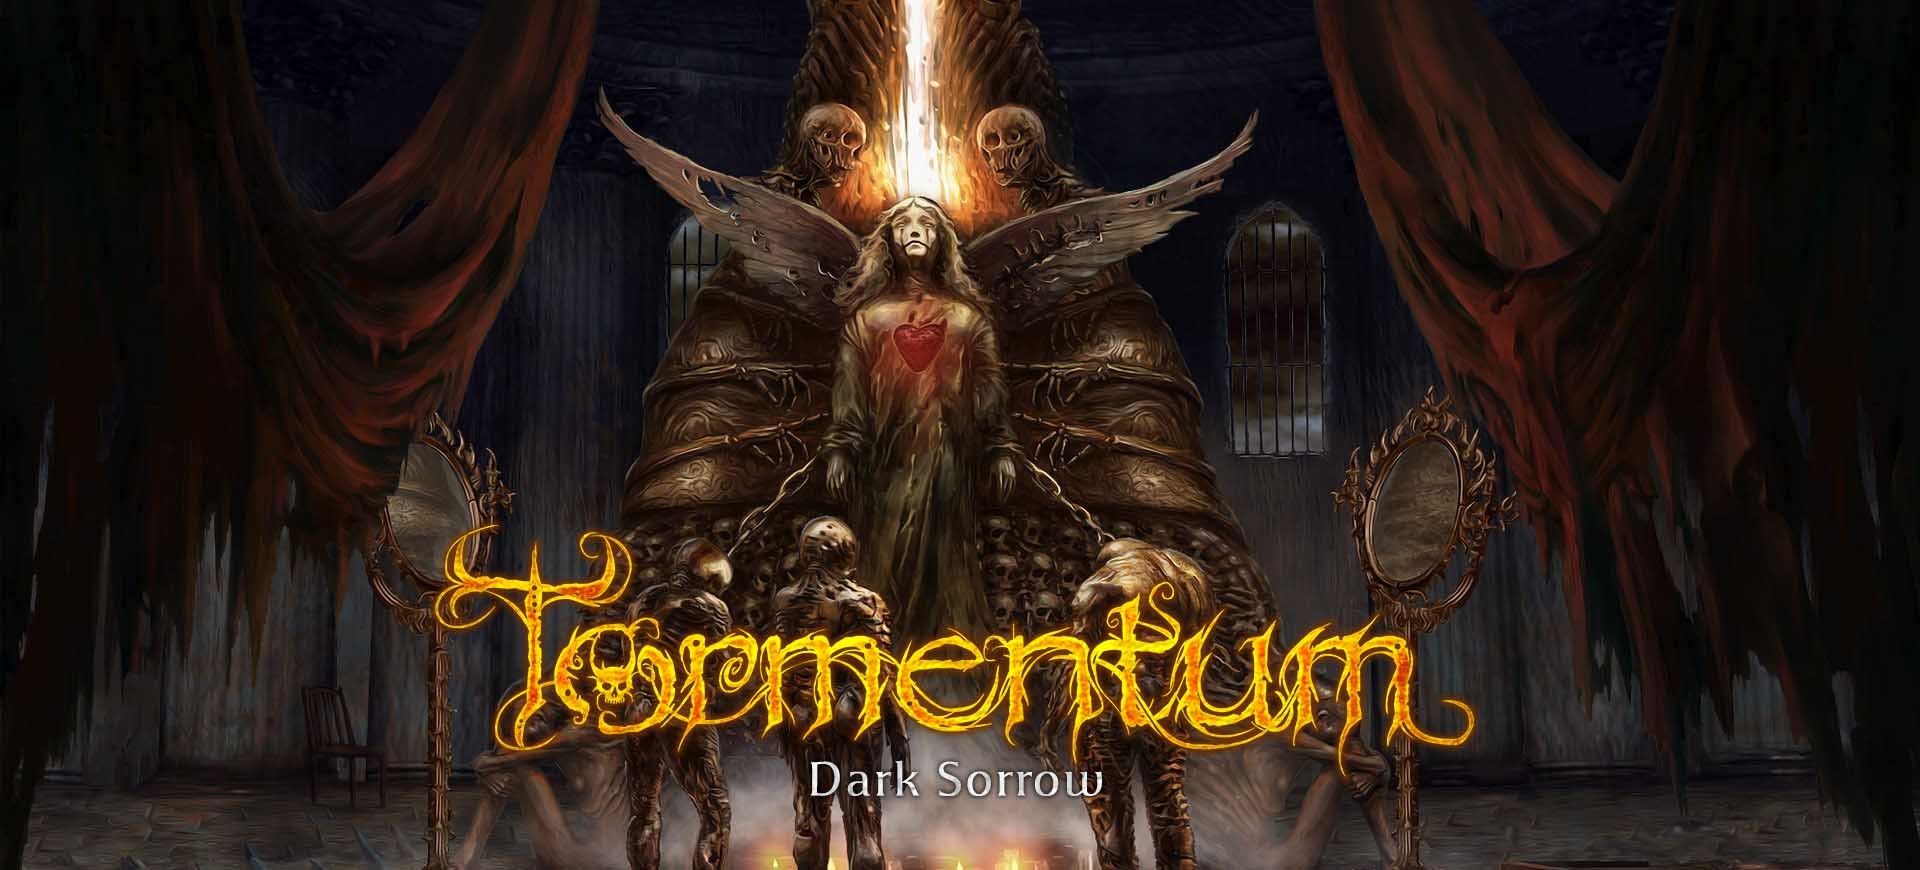 tormentum-dark-sorrow